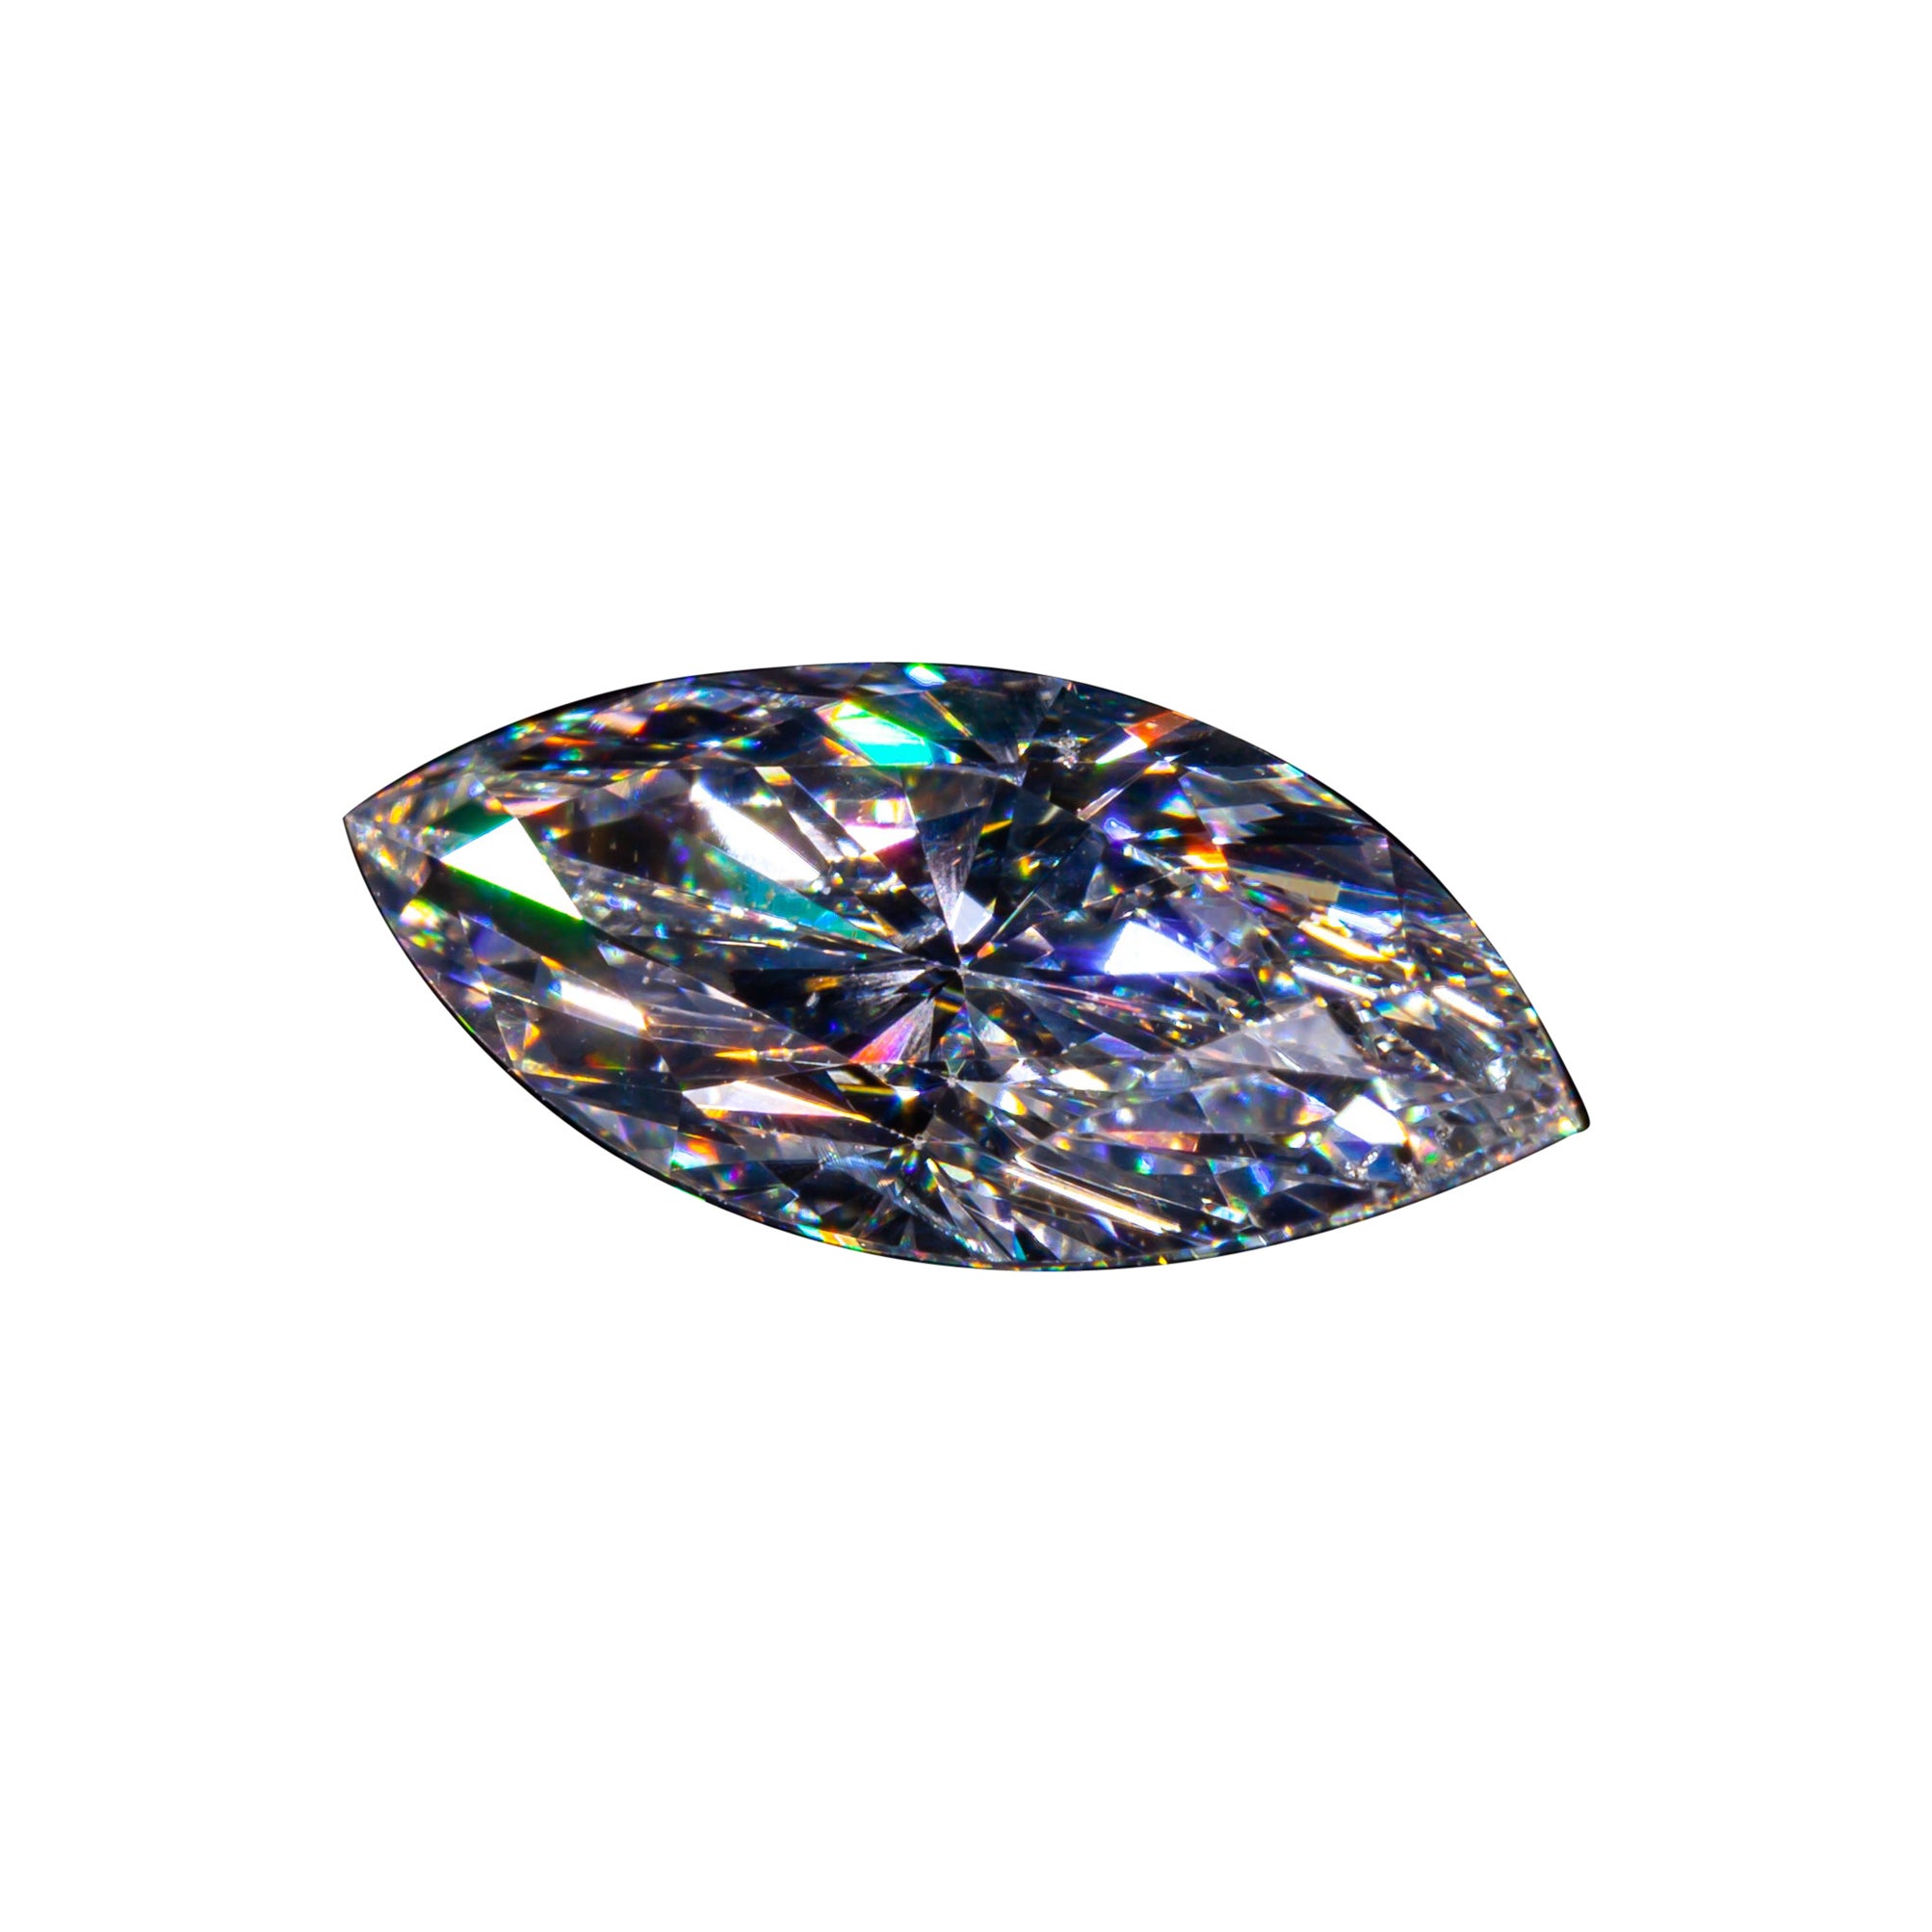 1.10 Carat Loose D / I1 Marquise Brilliant Cut Diamond GIA Certified